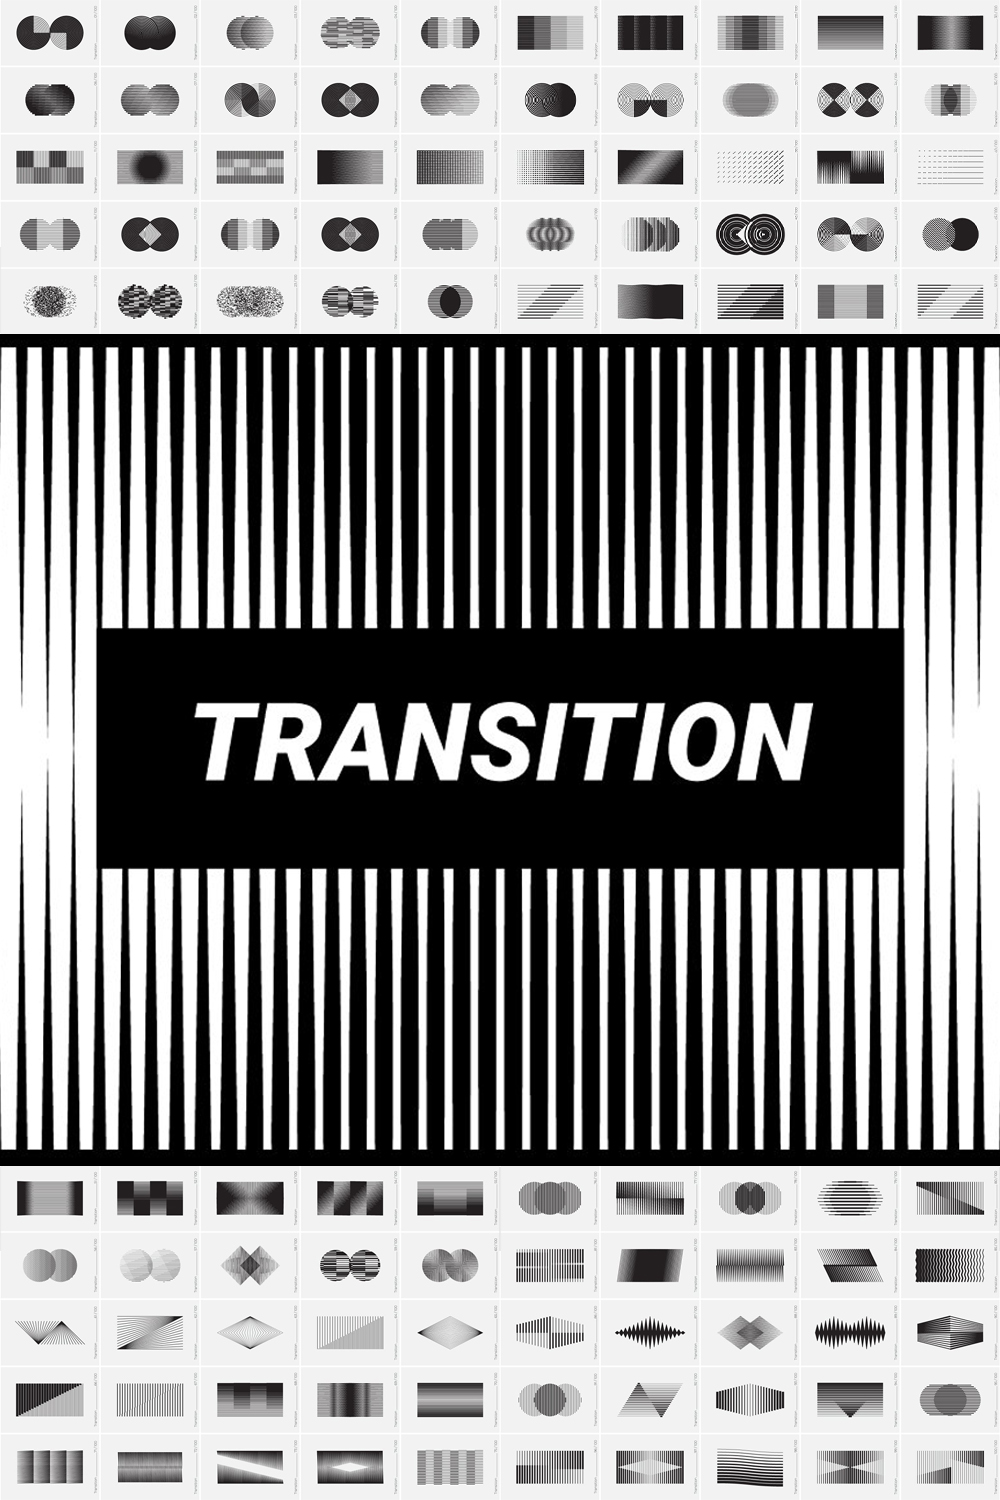 100 transition shapes of pinterest.